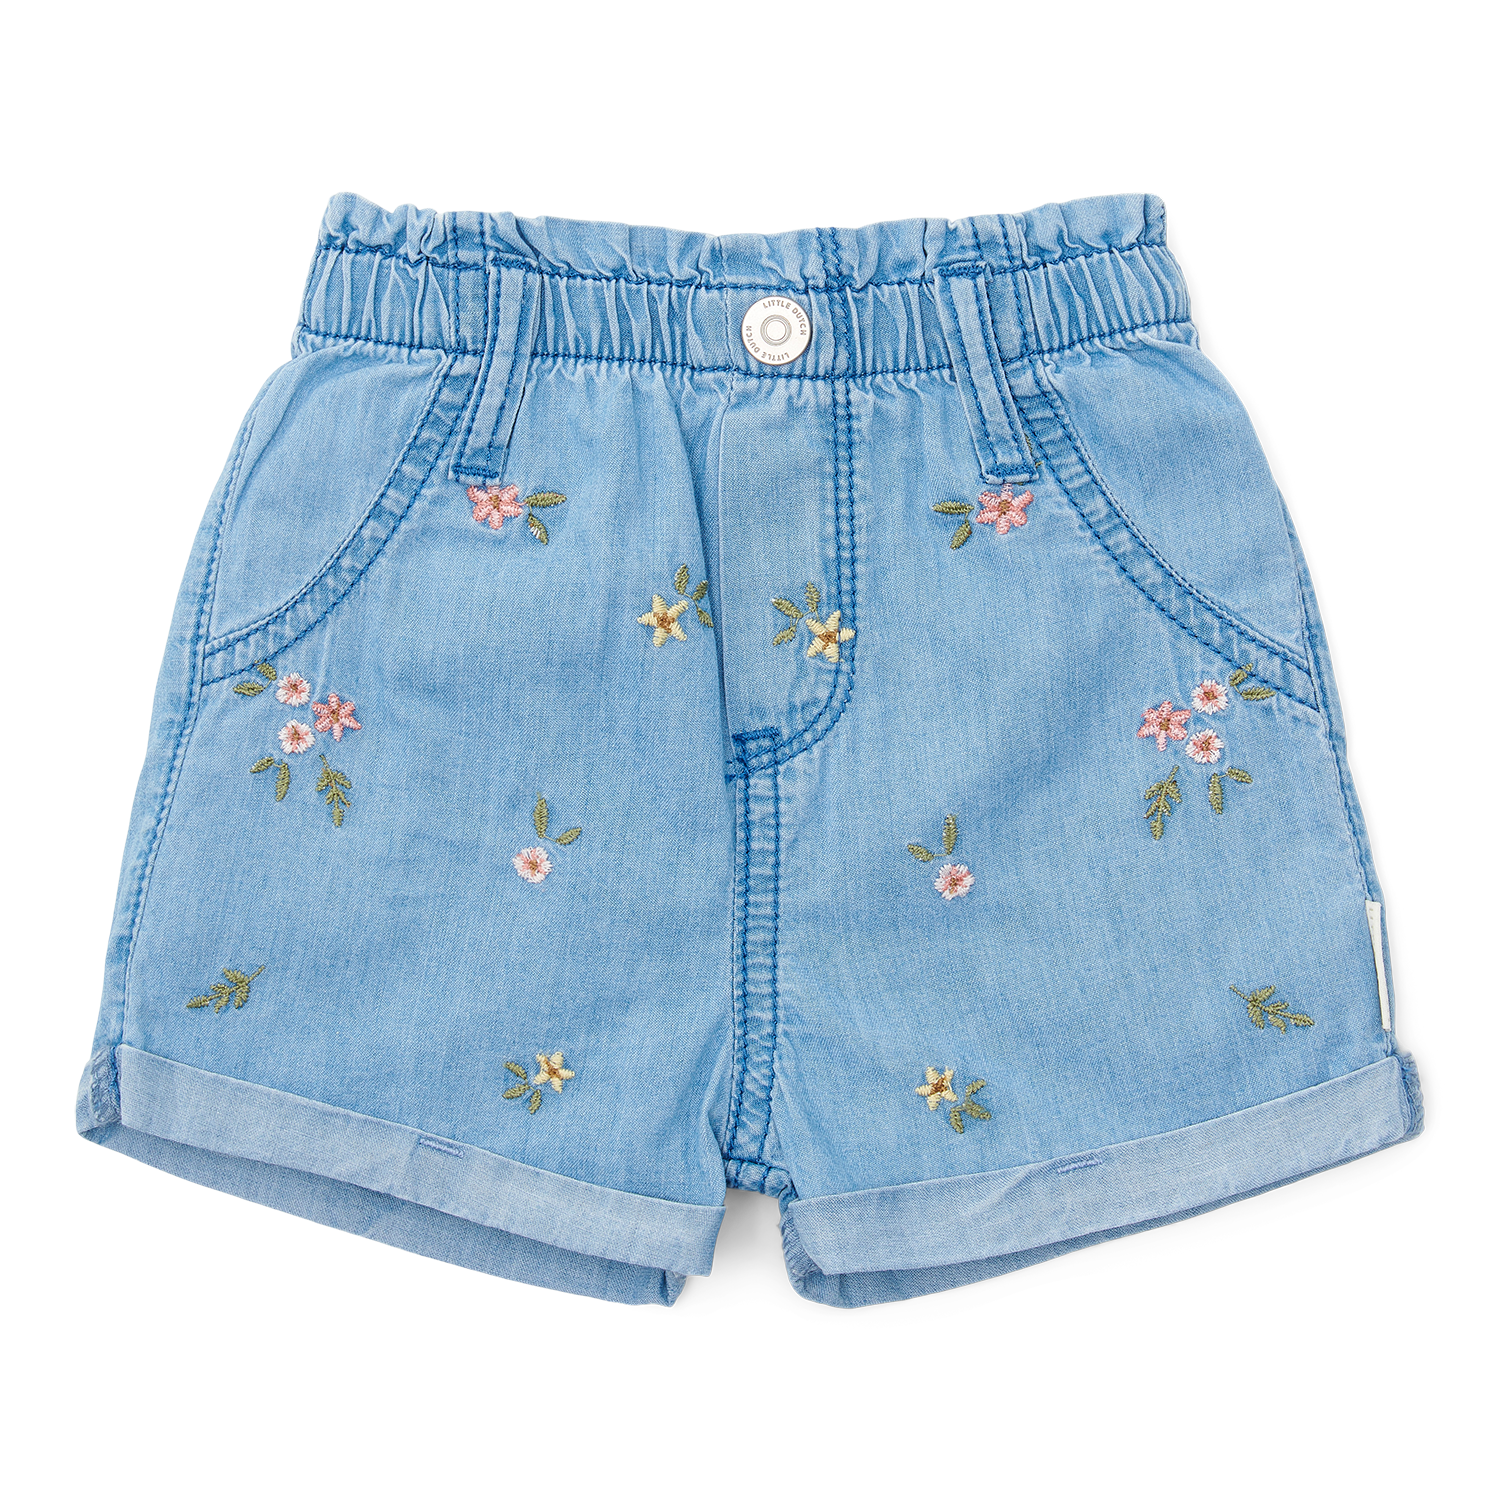 Kurze Hose / Shorts Denim Little Farm jeans (Gr. 74)